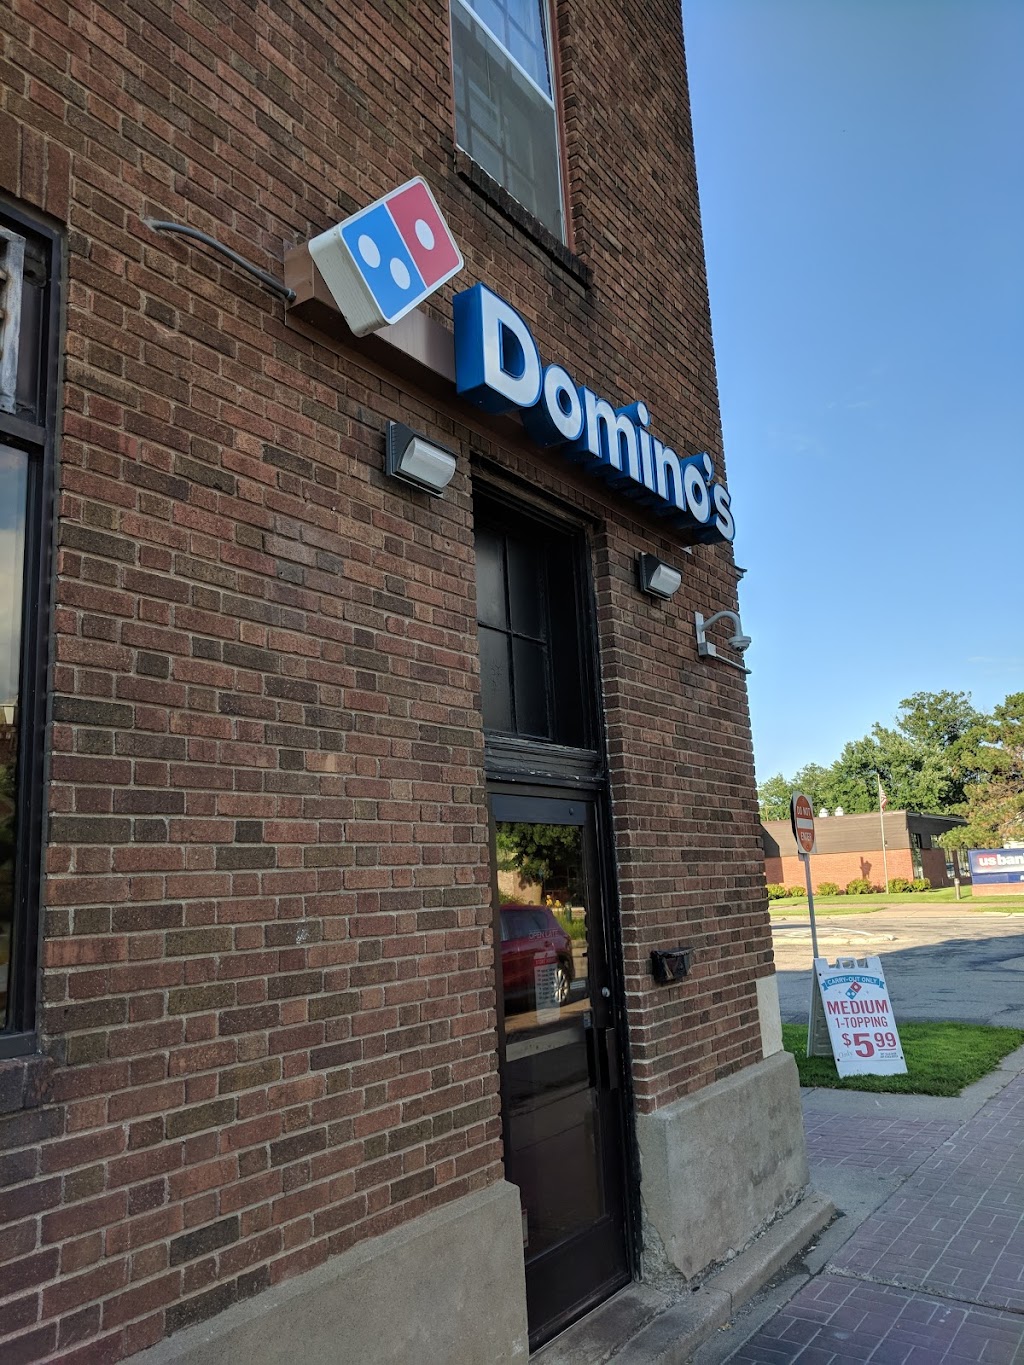 Dominos Pizza | 4701 Clark Ave, White Bear Lake, MN 55110, USA | Phone: (651) 429-9192